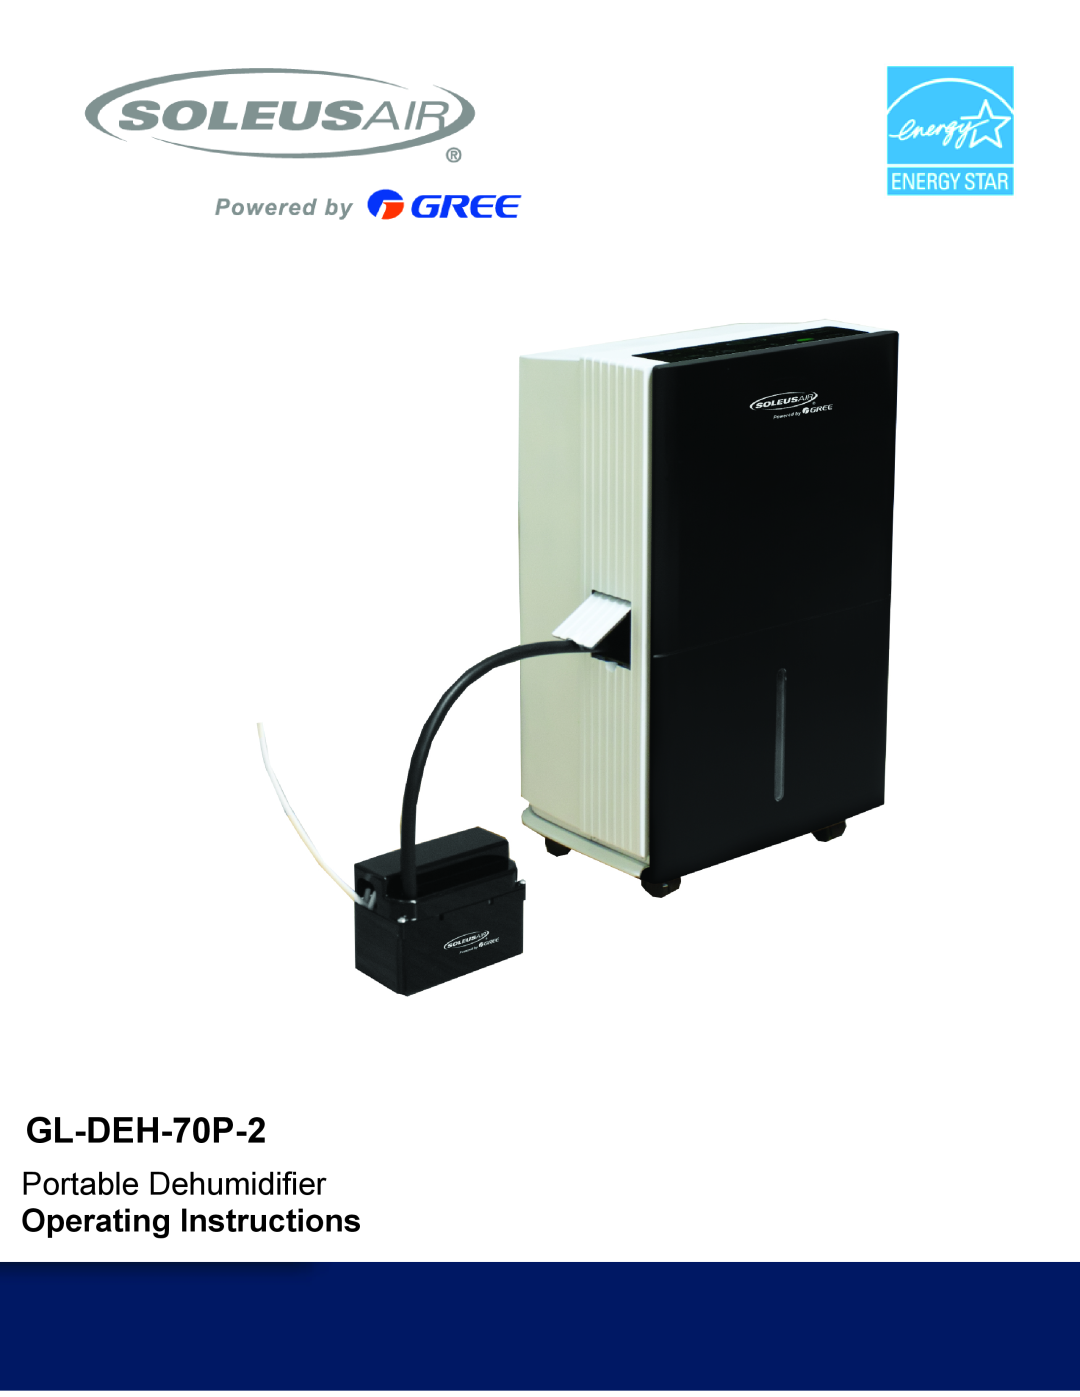 Soleus Air GL-DEH-70P-2 operating instructions Portable Dehumidifier, Operating Instructions 